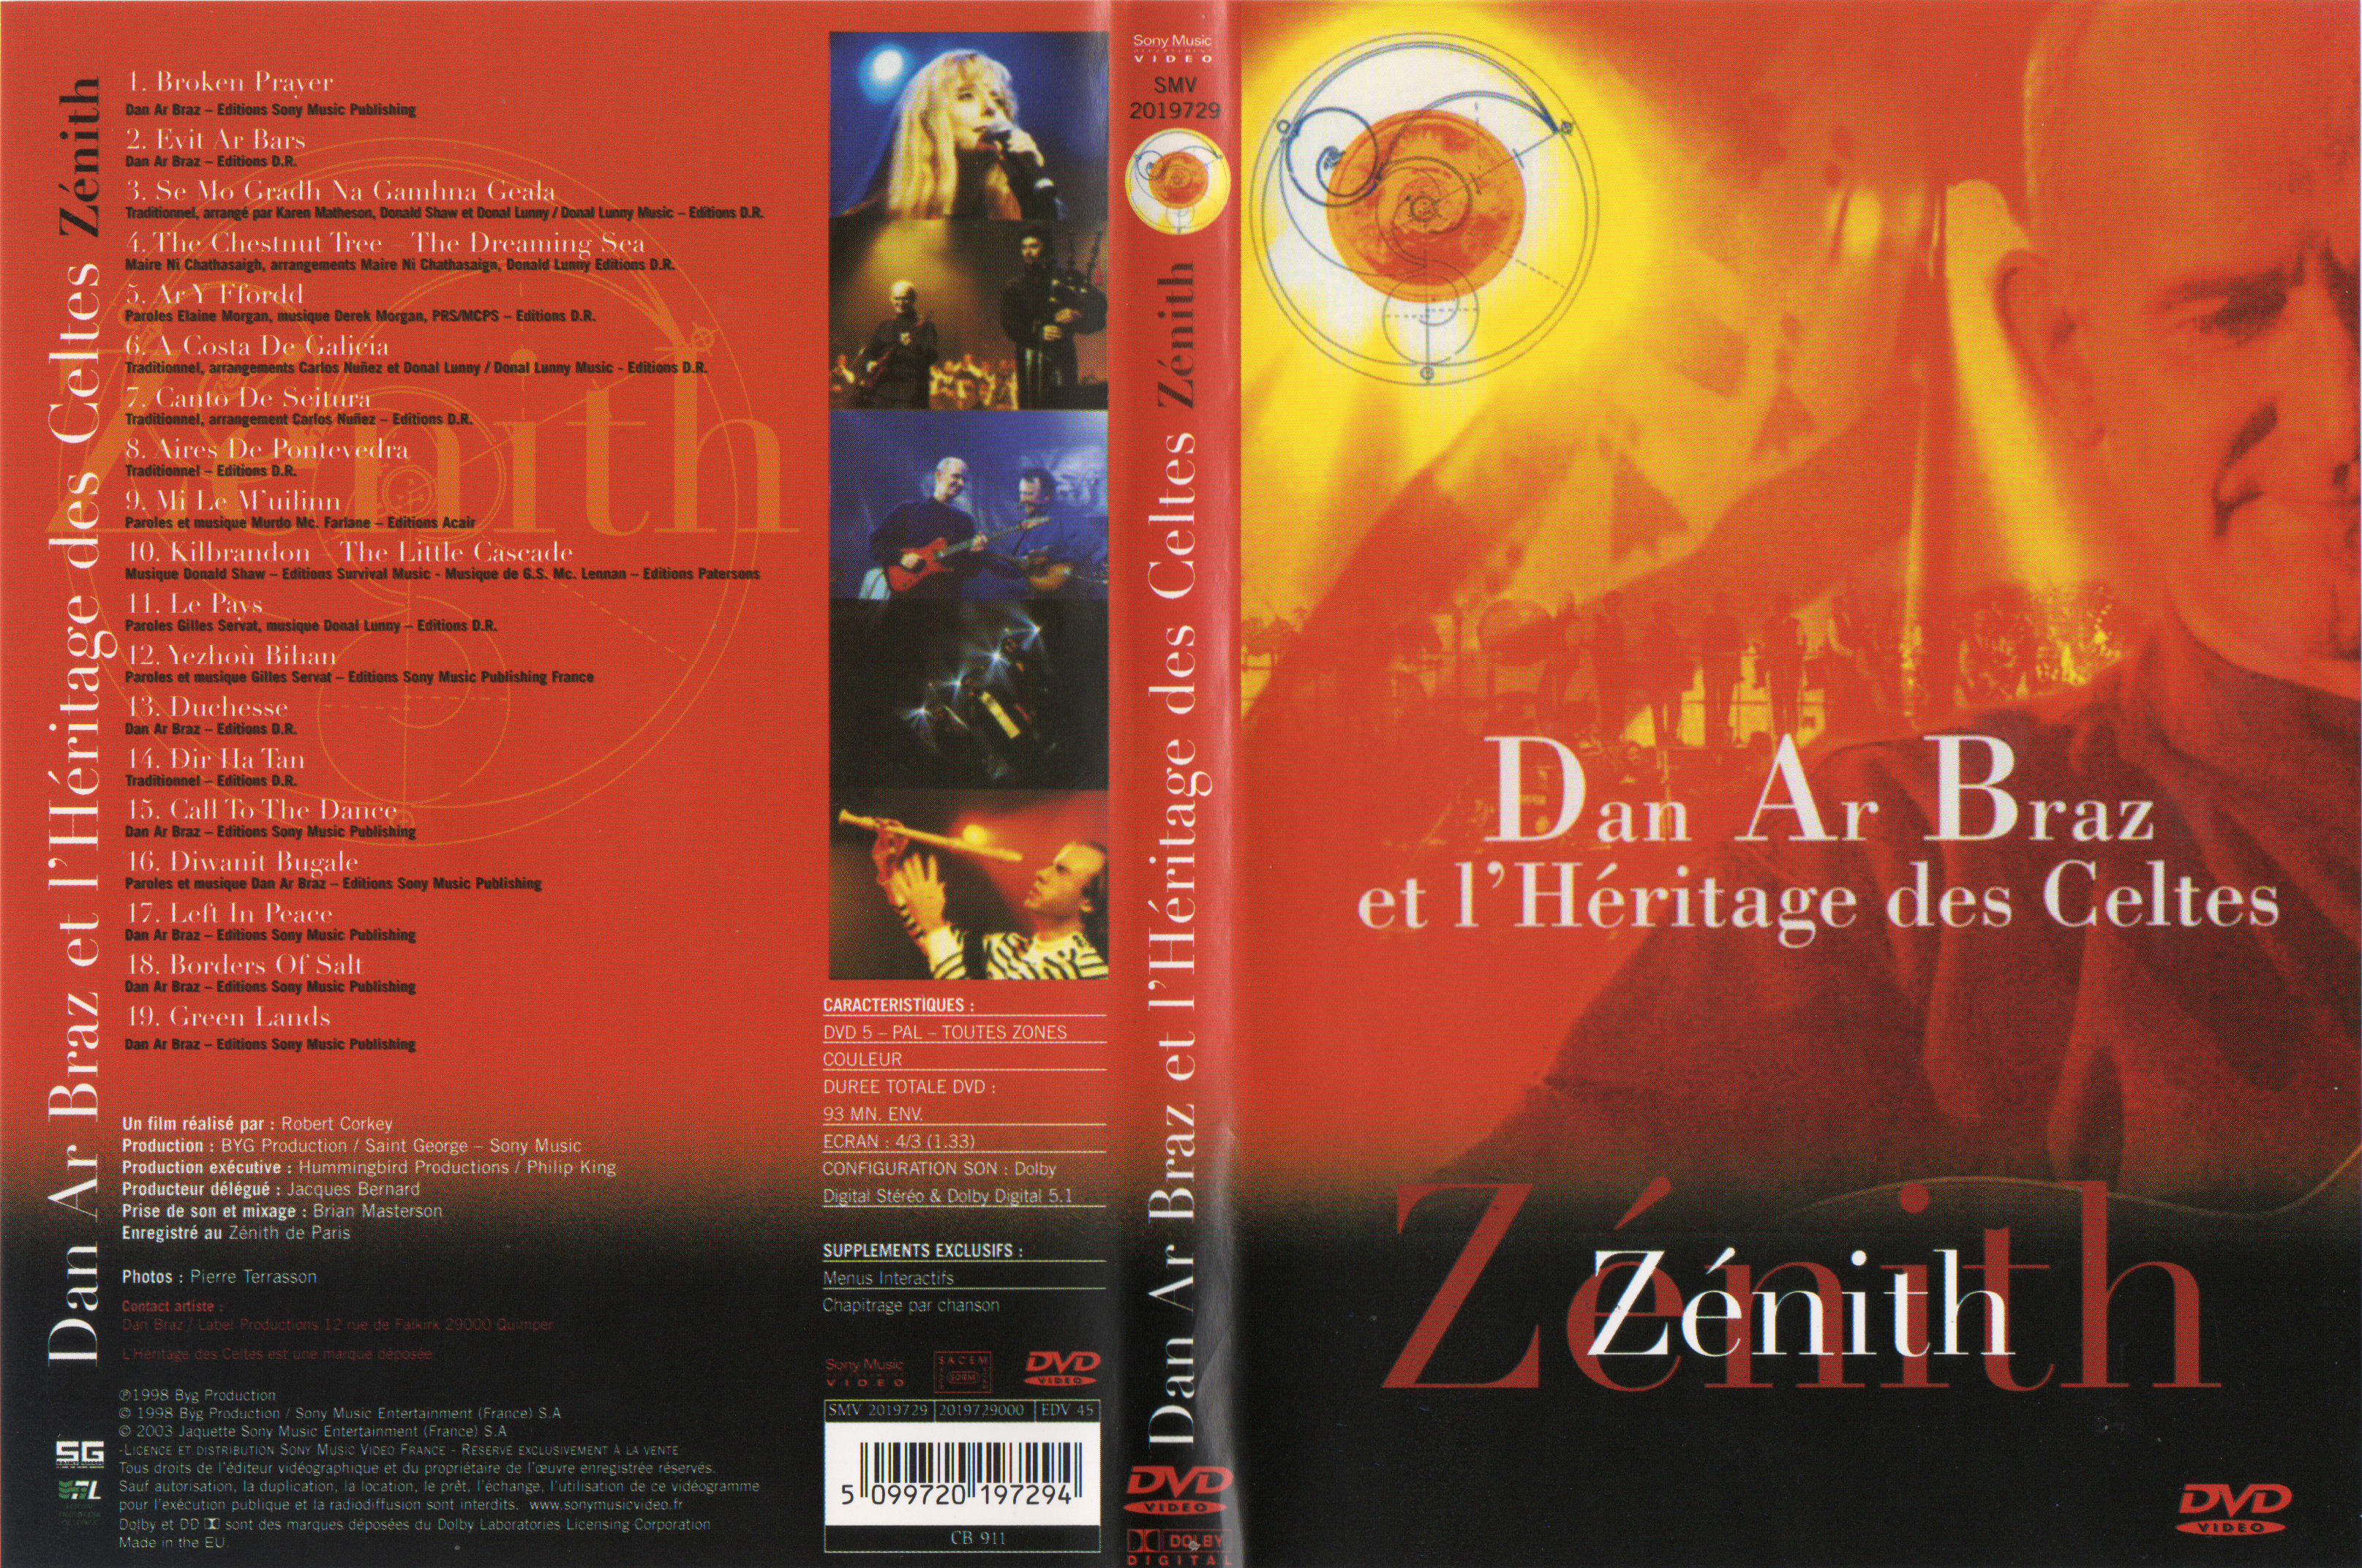 Jaquette DVD Dan Ar Braz Zenith